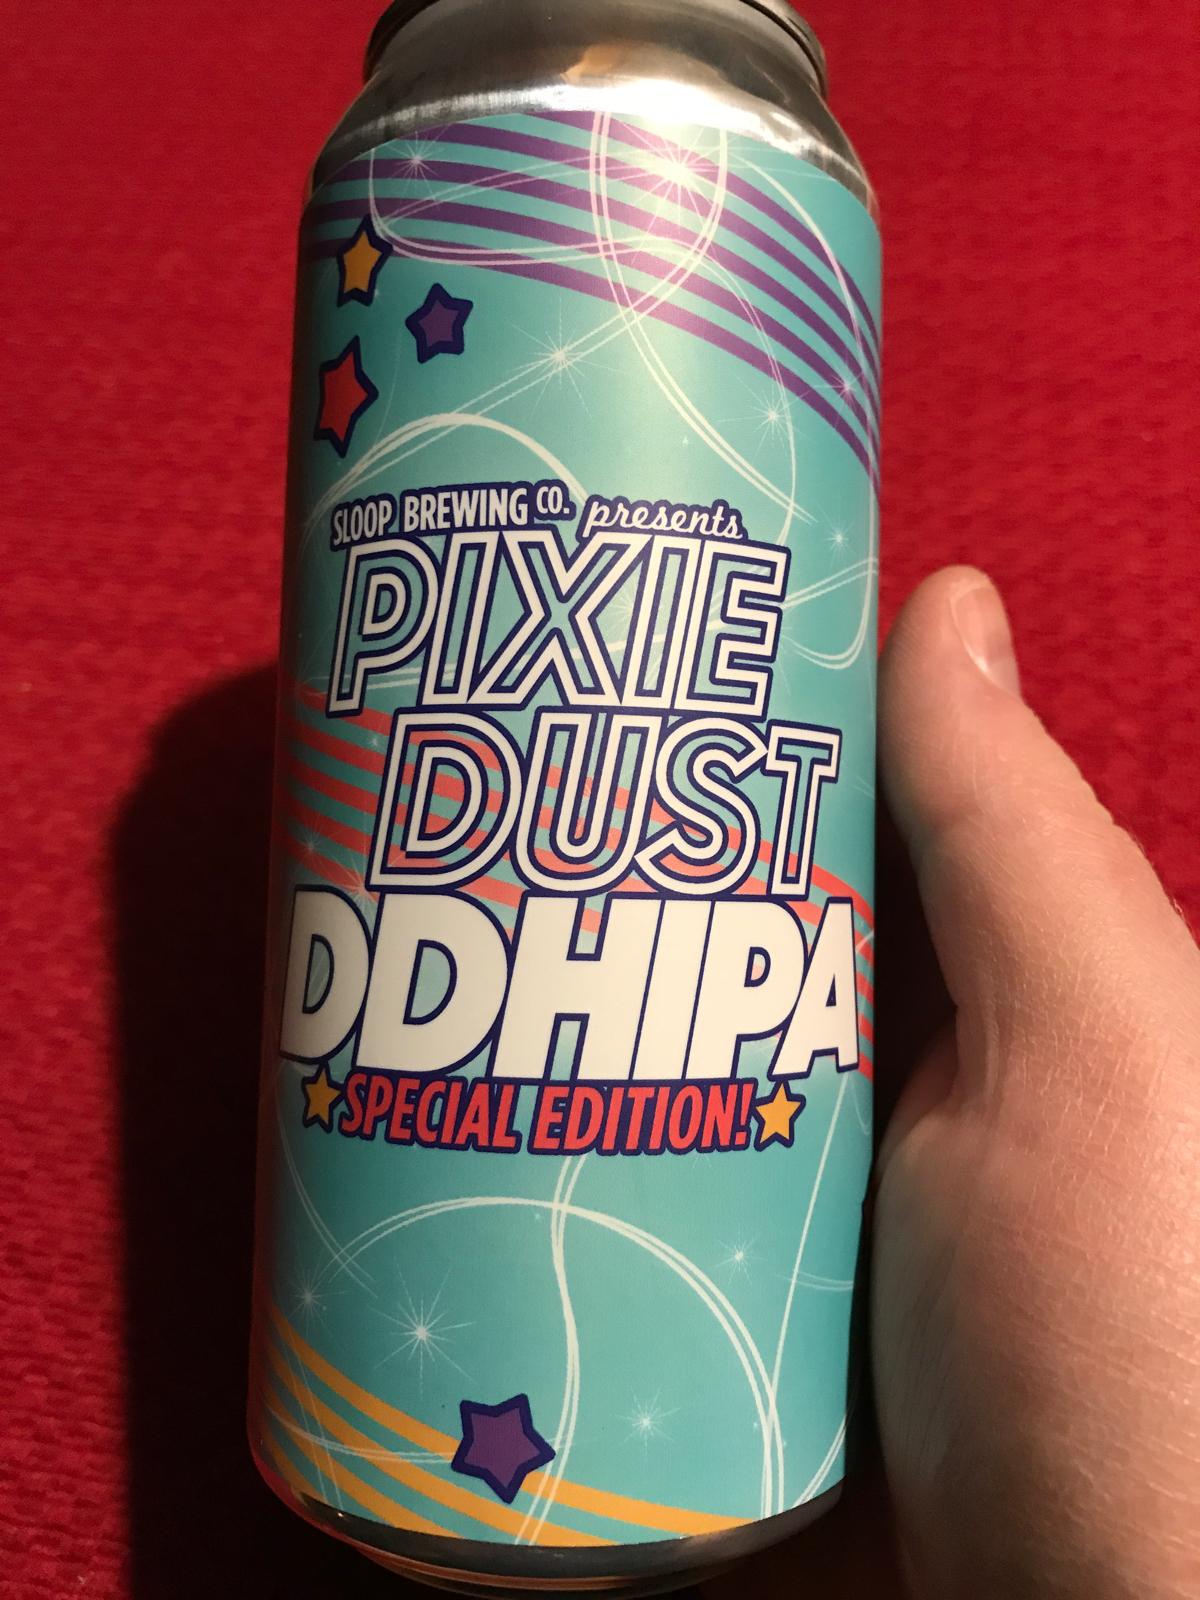 Pixie Dust DDHIPA